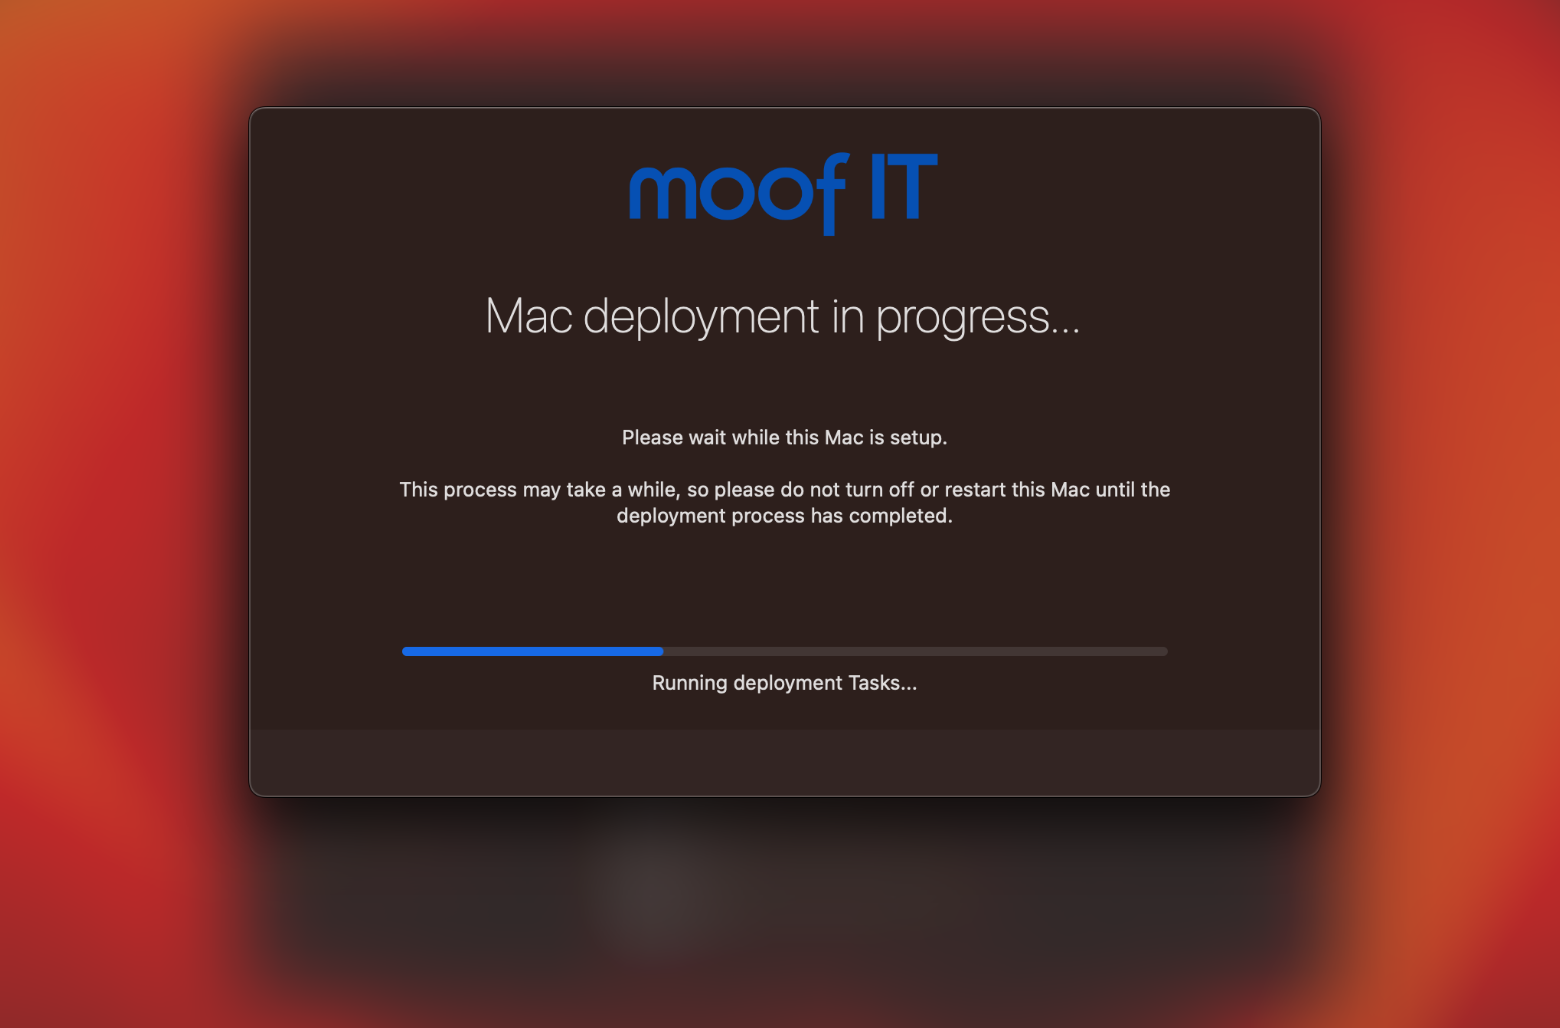 moof it mac deployment in progress... screenshot